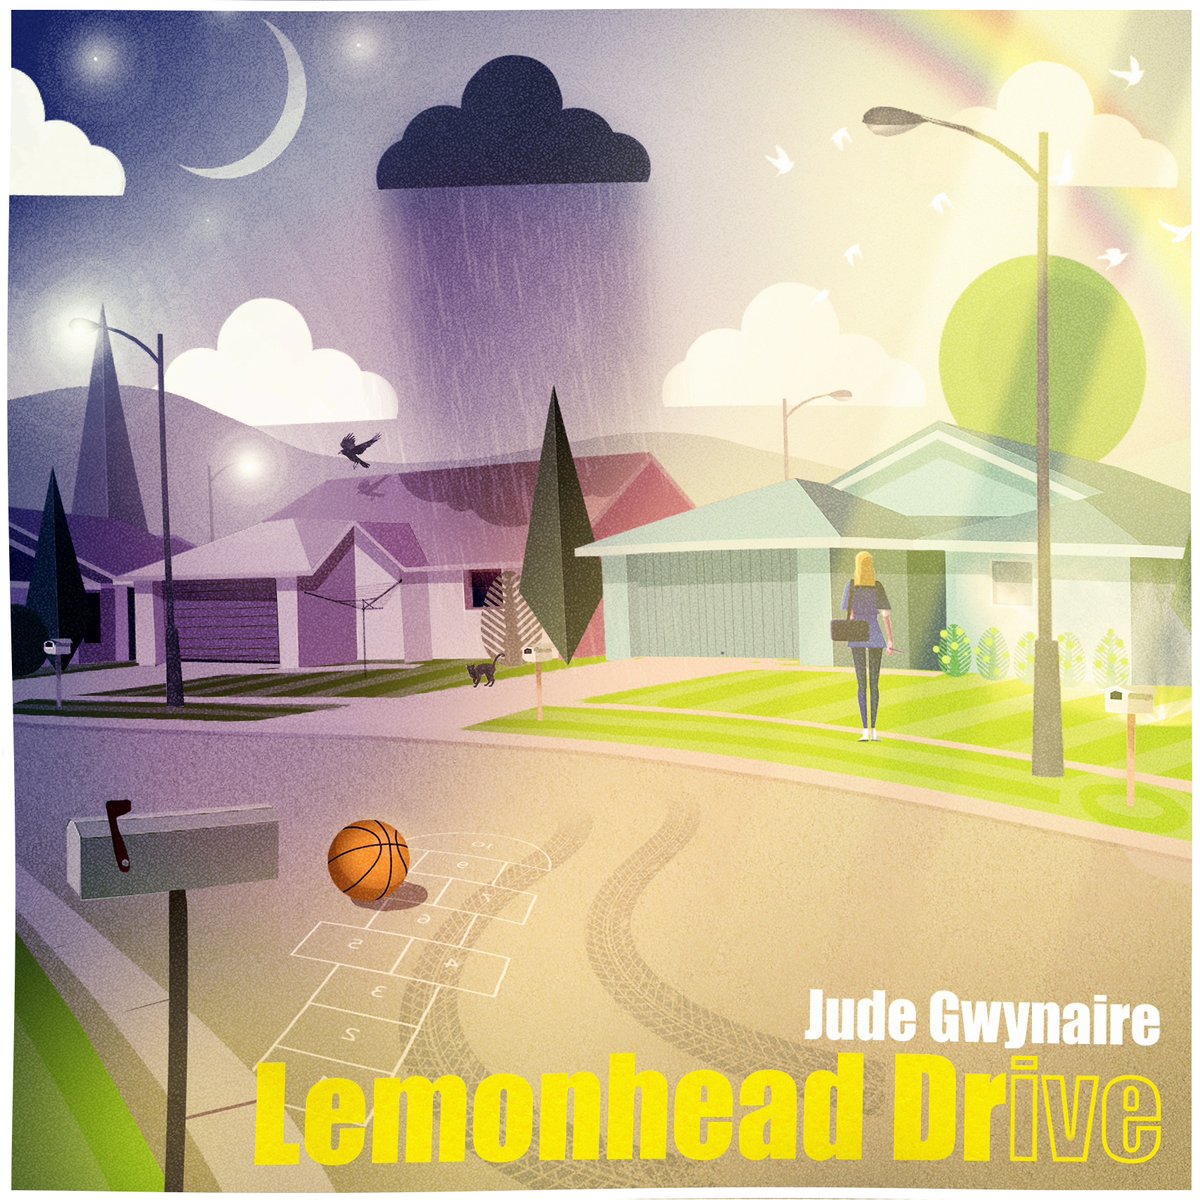 Here's a review of my album, 'Lemonhead Drive'! skopemag.com/2020/06/24/jud……………… 🎹judegwynaire.com 
#music #NewMusicMonday #USA #rockmusic #ambientmusic #experimentalmusic #film